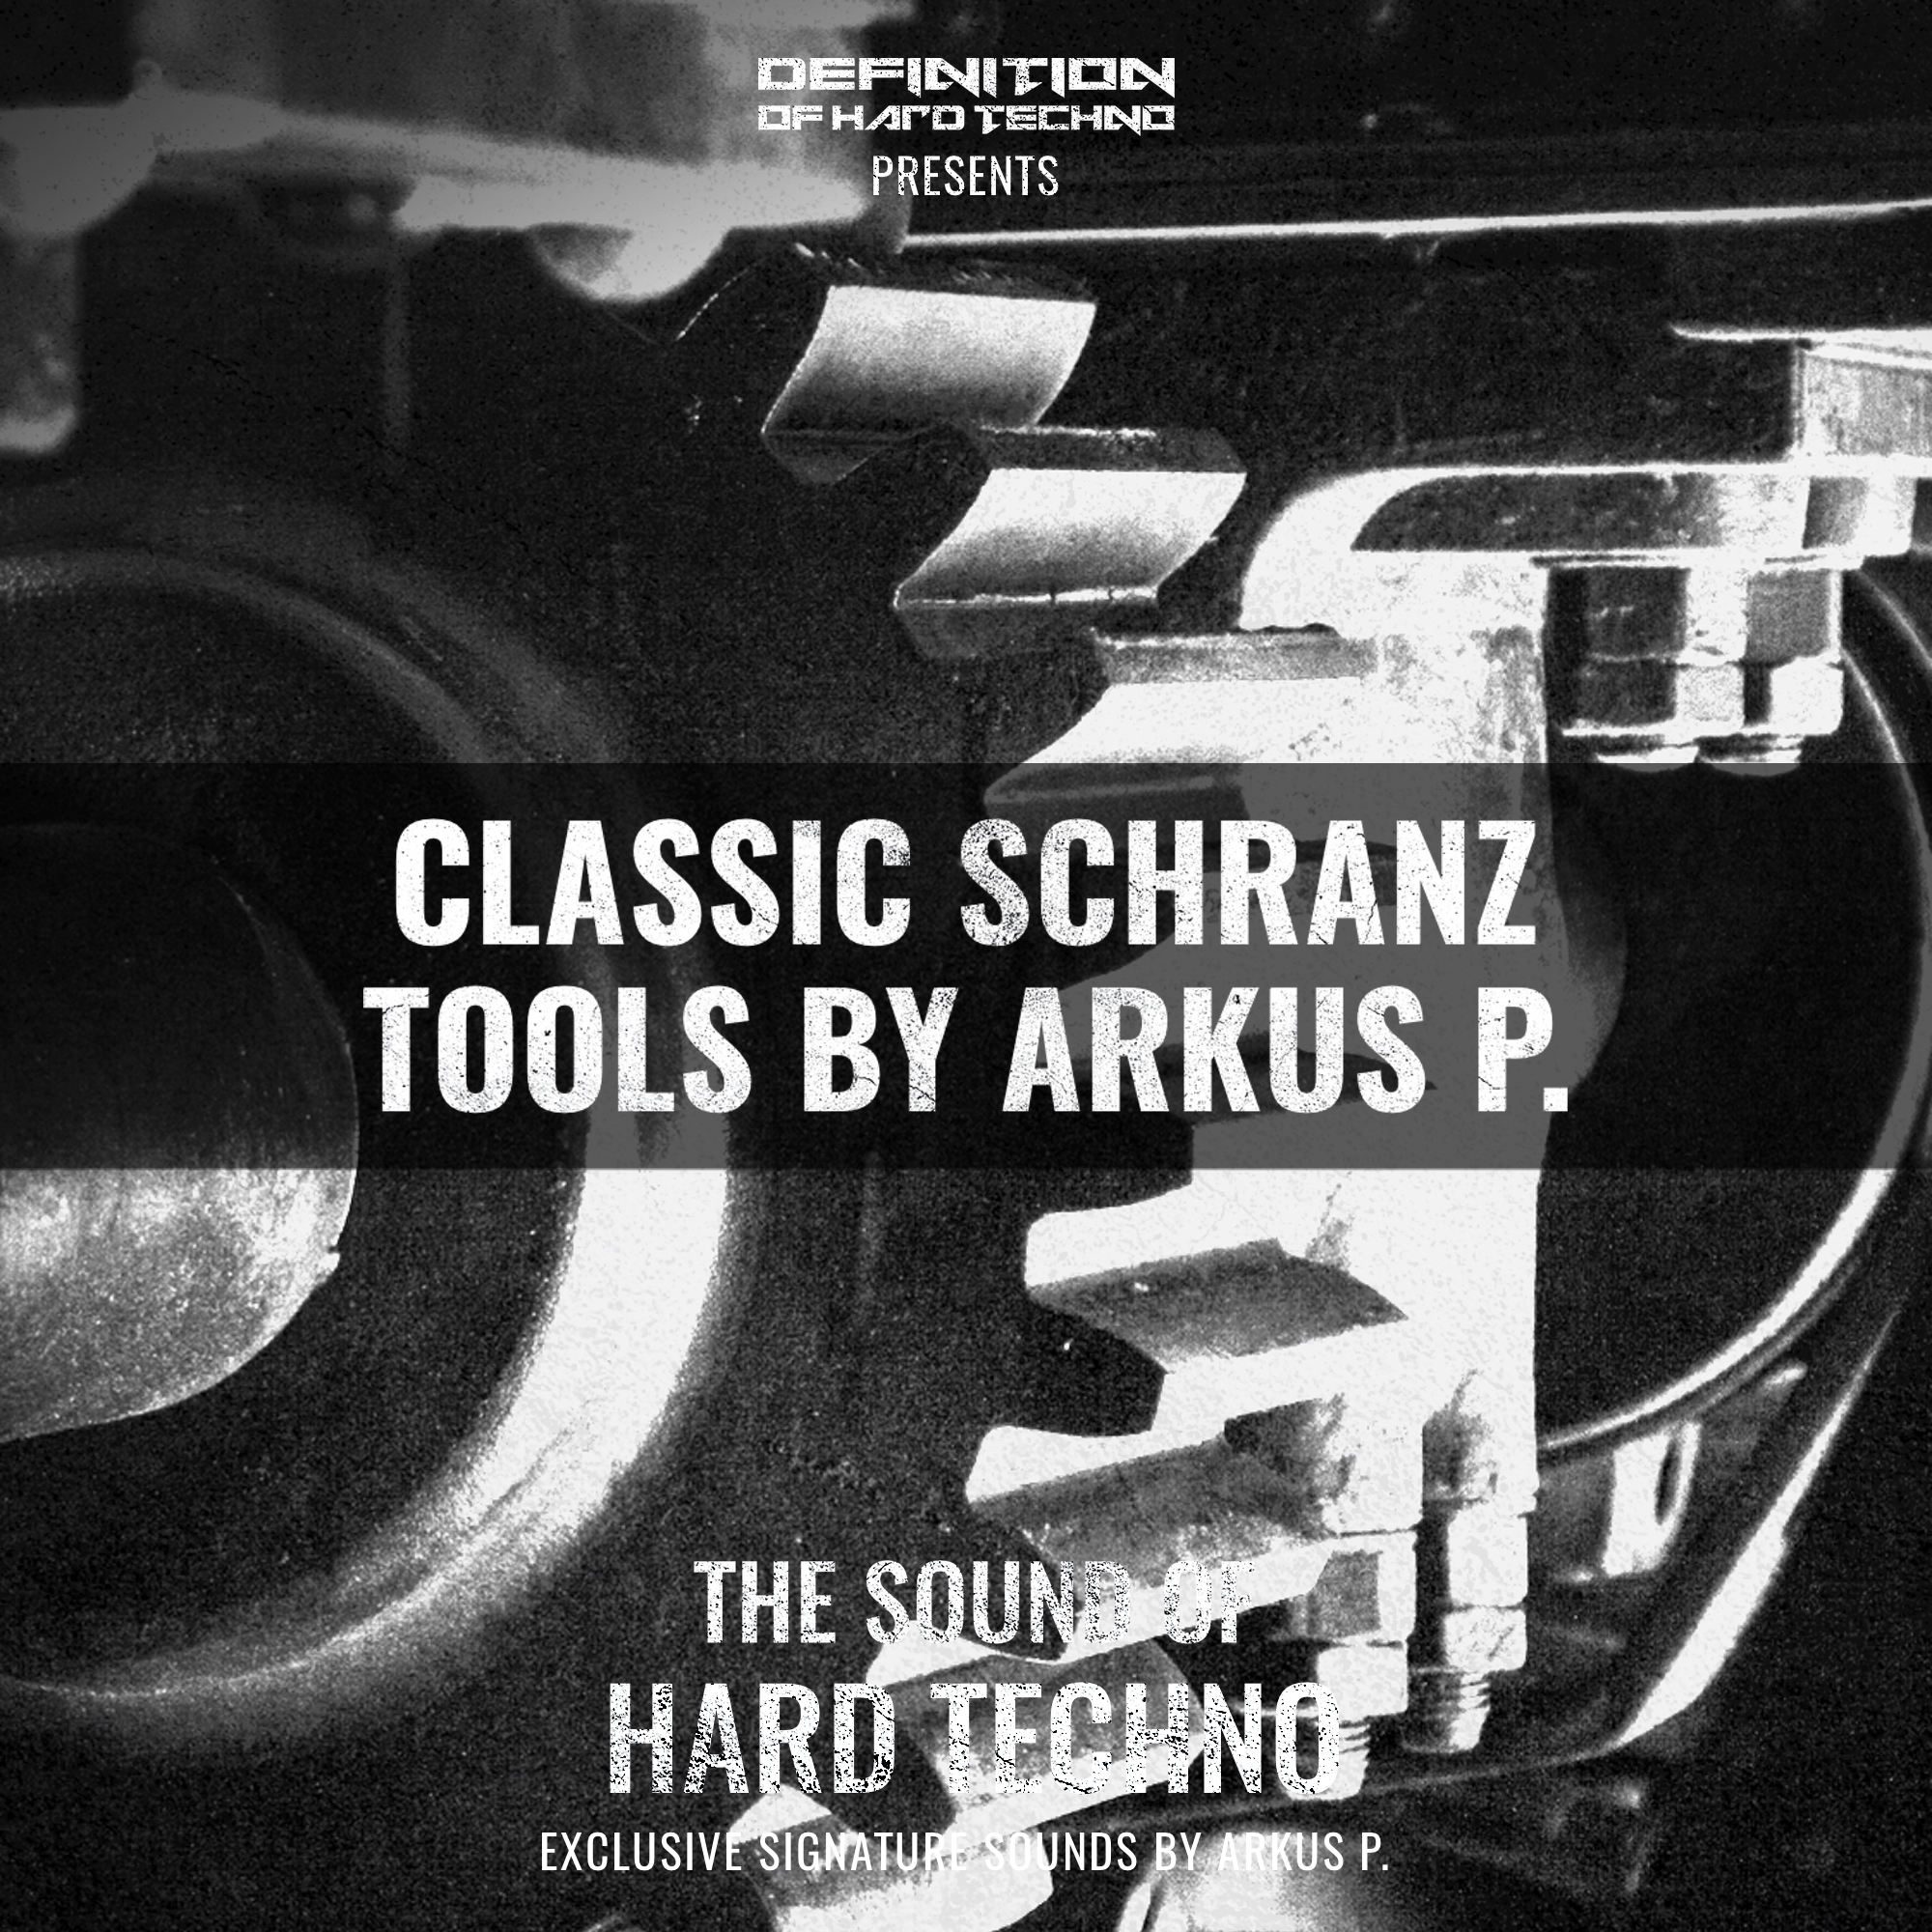 DOHT - Classic Schranz Tools by Arkus P.